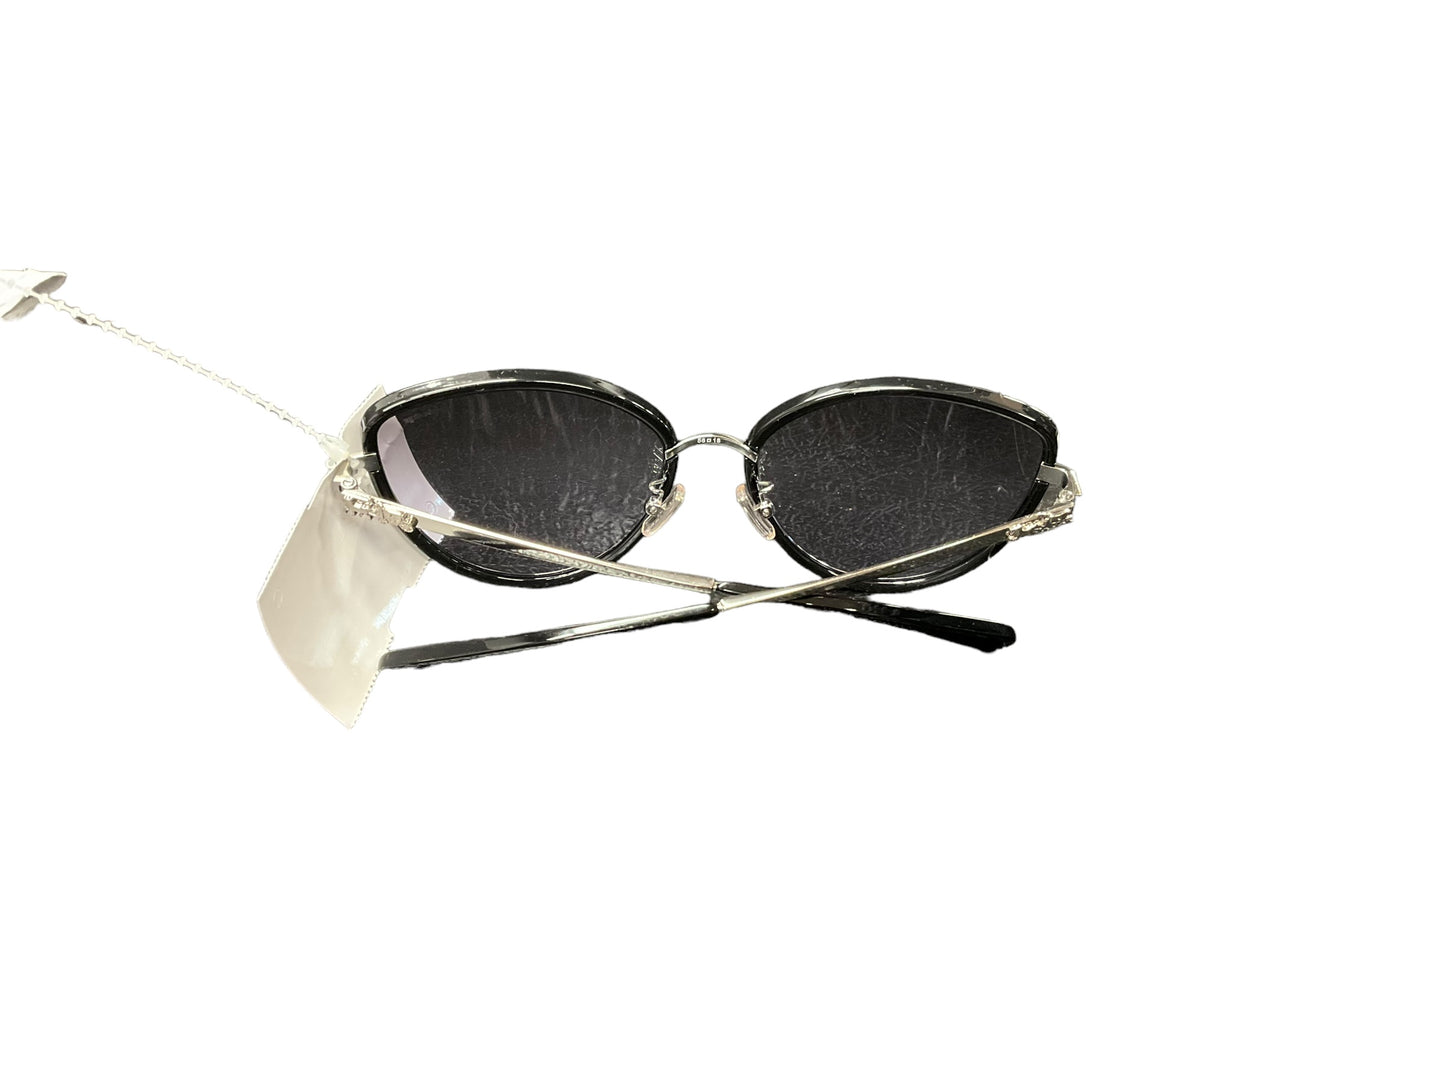 Sunglasses Designer By Coach